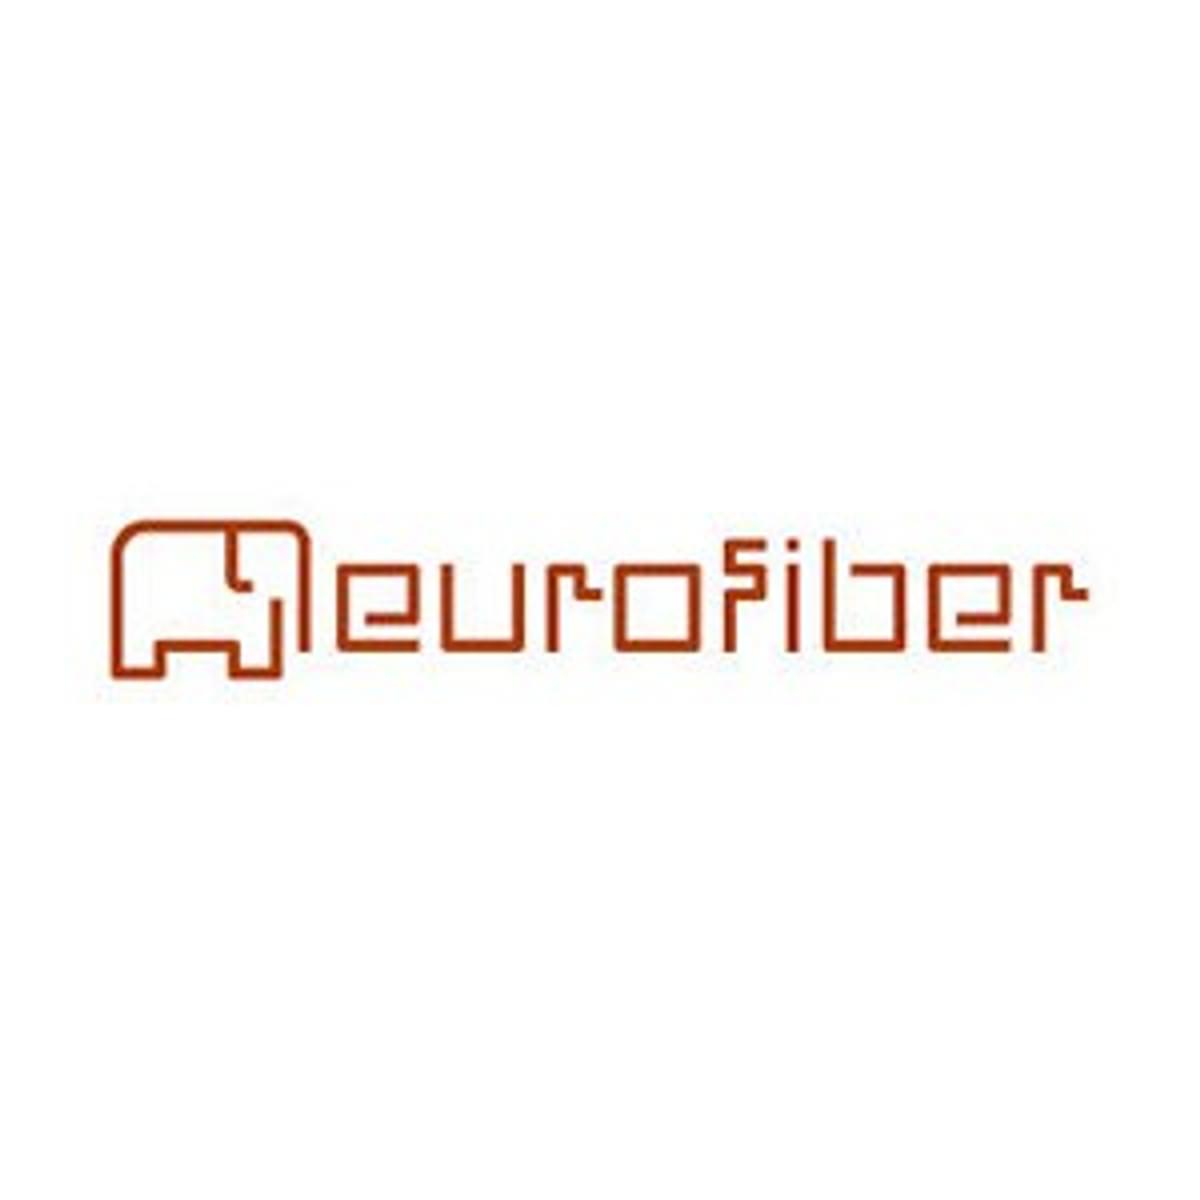 Eurofiber treedt toe tot Amsterdam Smart City-netwerk image